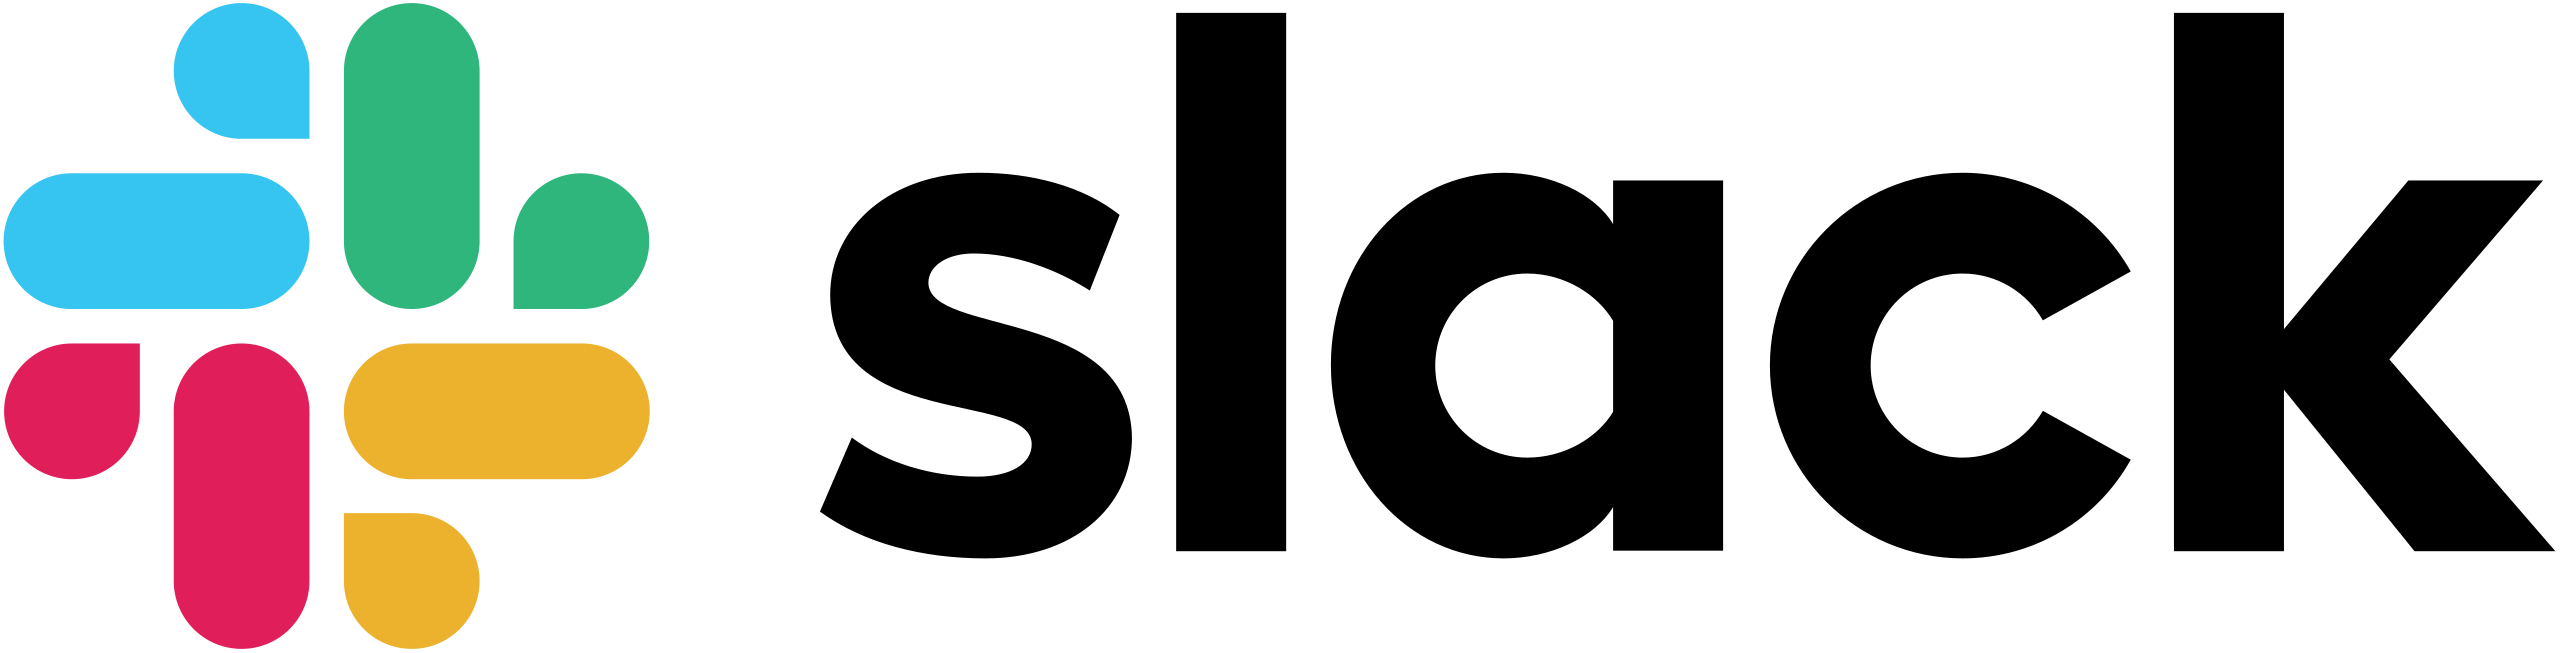 File:Slack Technologies Logo.svg - Wikipedia